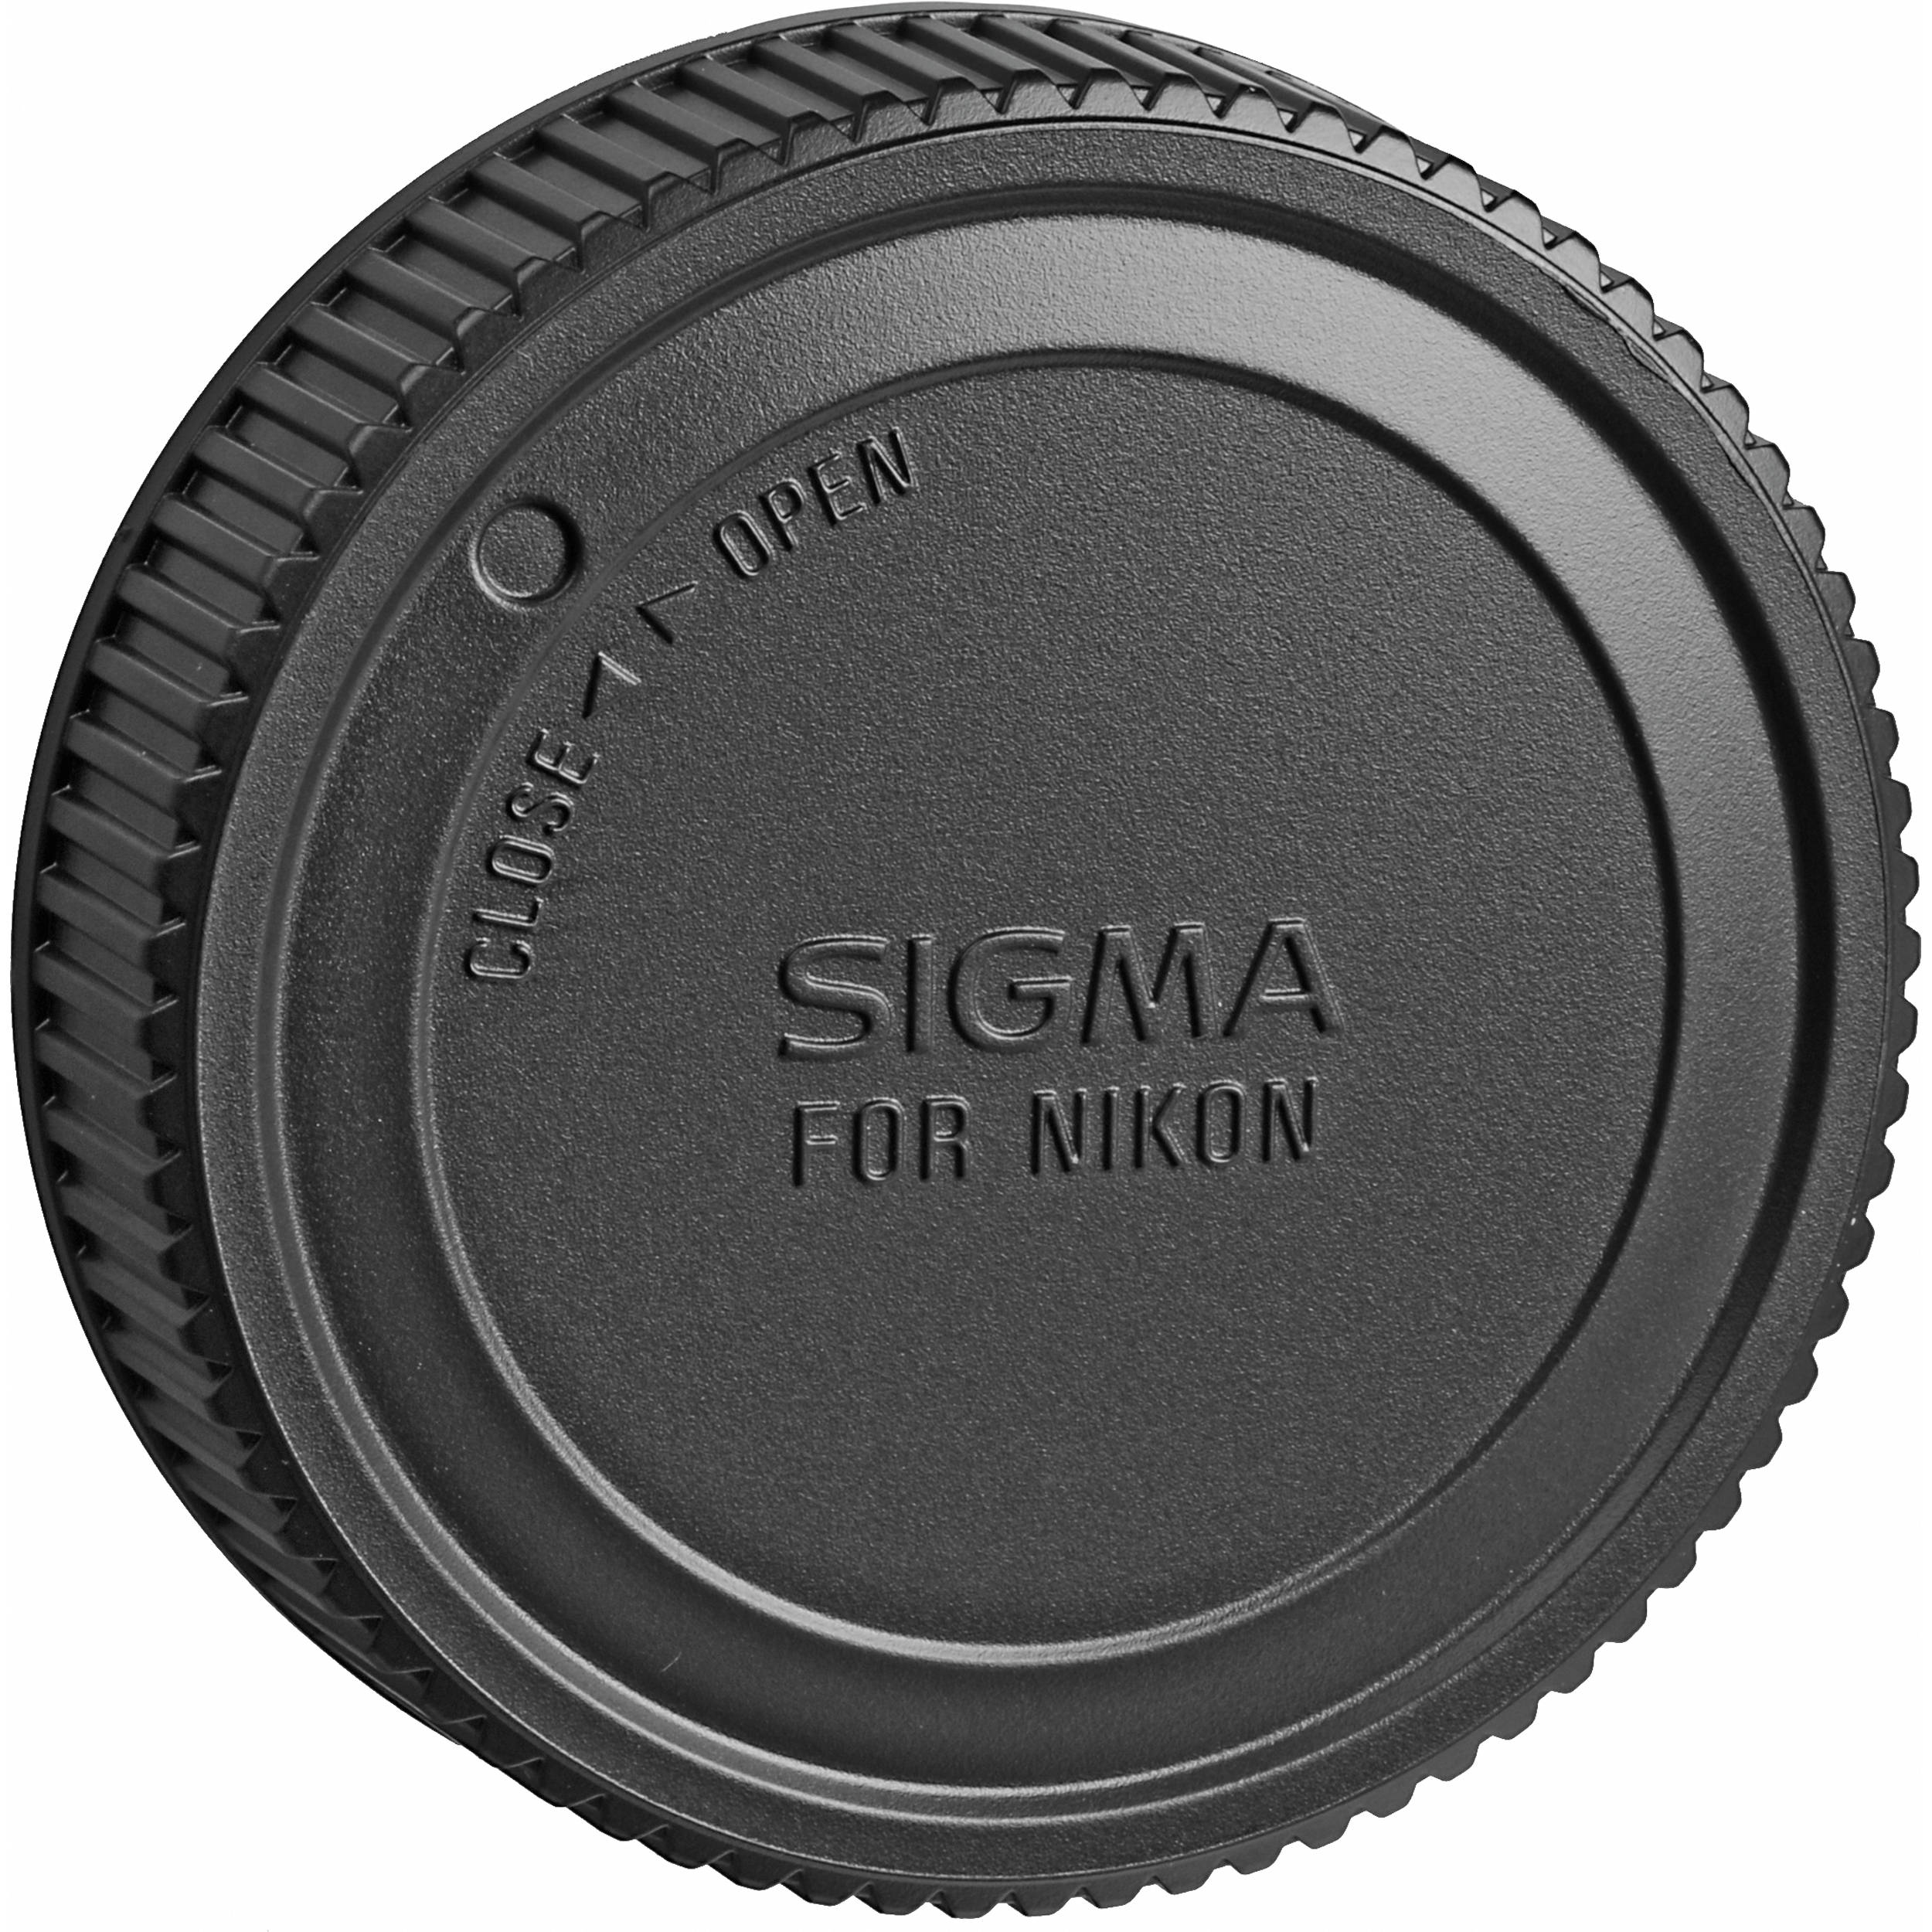 Sigma 10 mm F 4 5 6d Ex Dc Hsm Autofocus Zoom Lens For Nikon